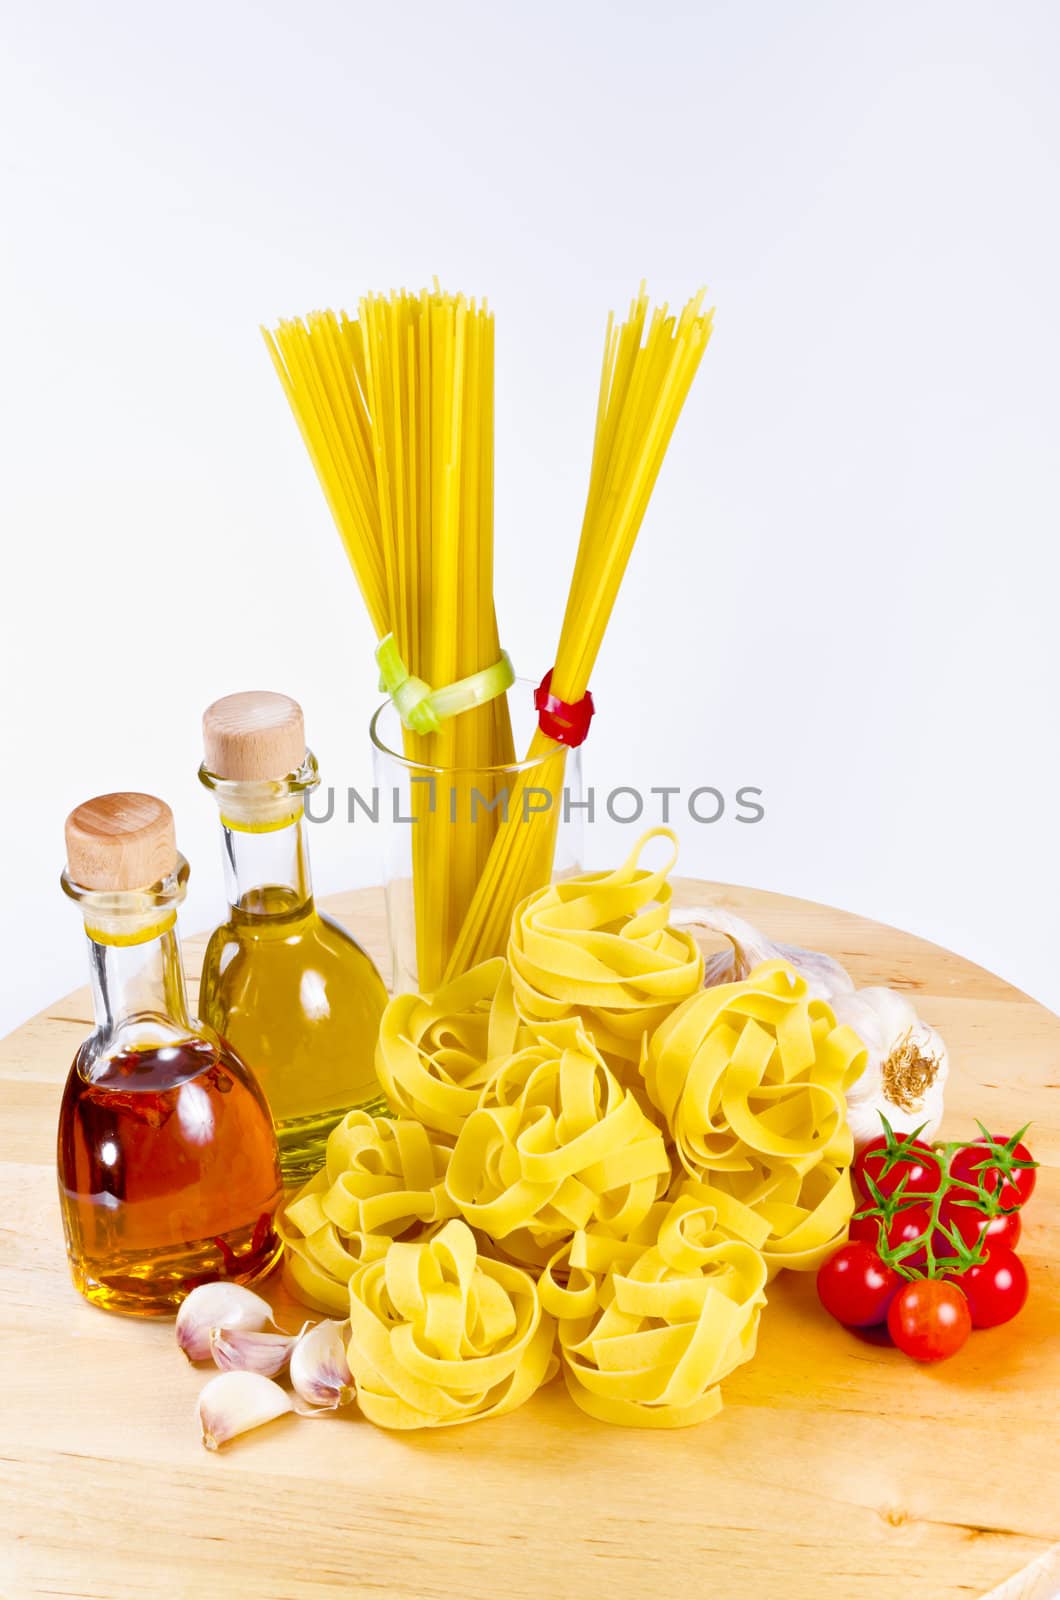 Pappardelle and Spaghetti by Darius.Dzinnik